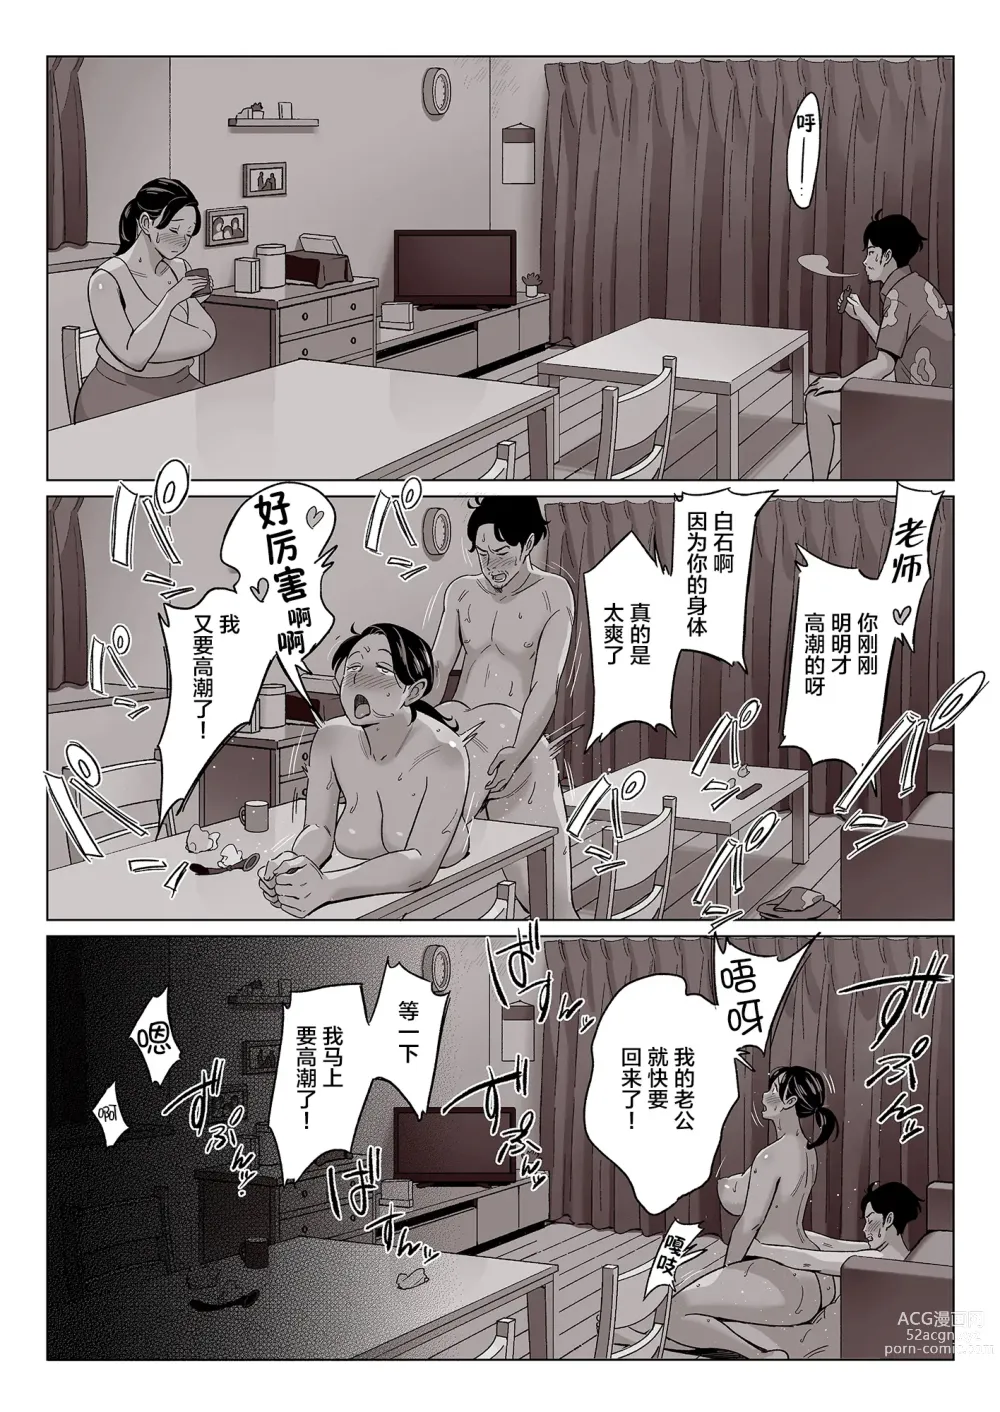 Page 259 of manga Muchi Niku Heaven de Pan Pan Pan